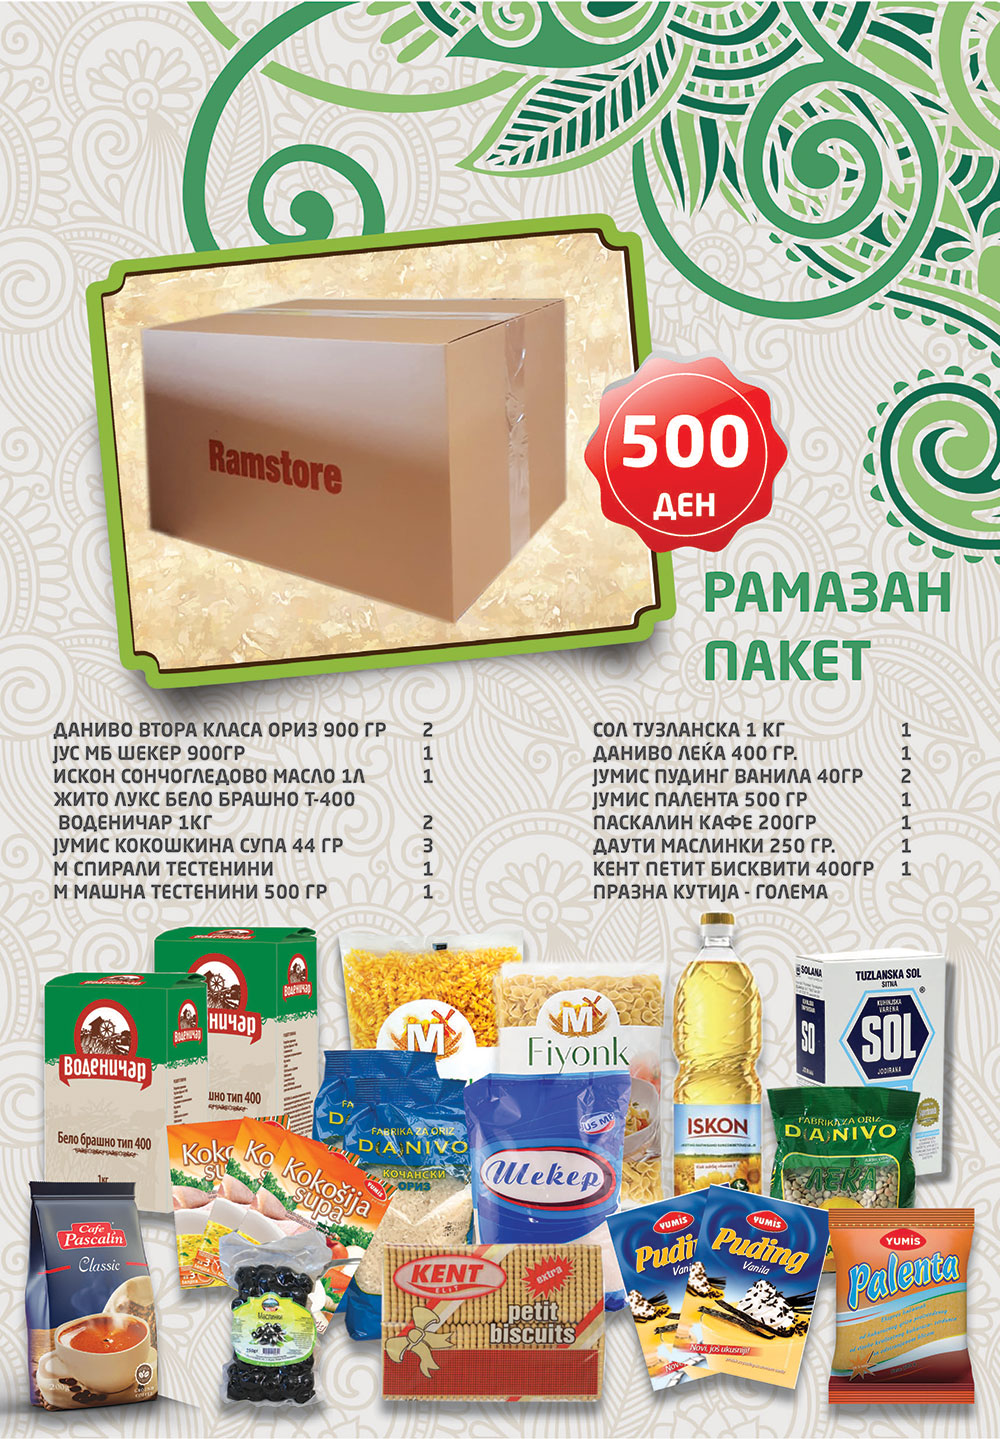 RAMAZAN-paket--500-MKD